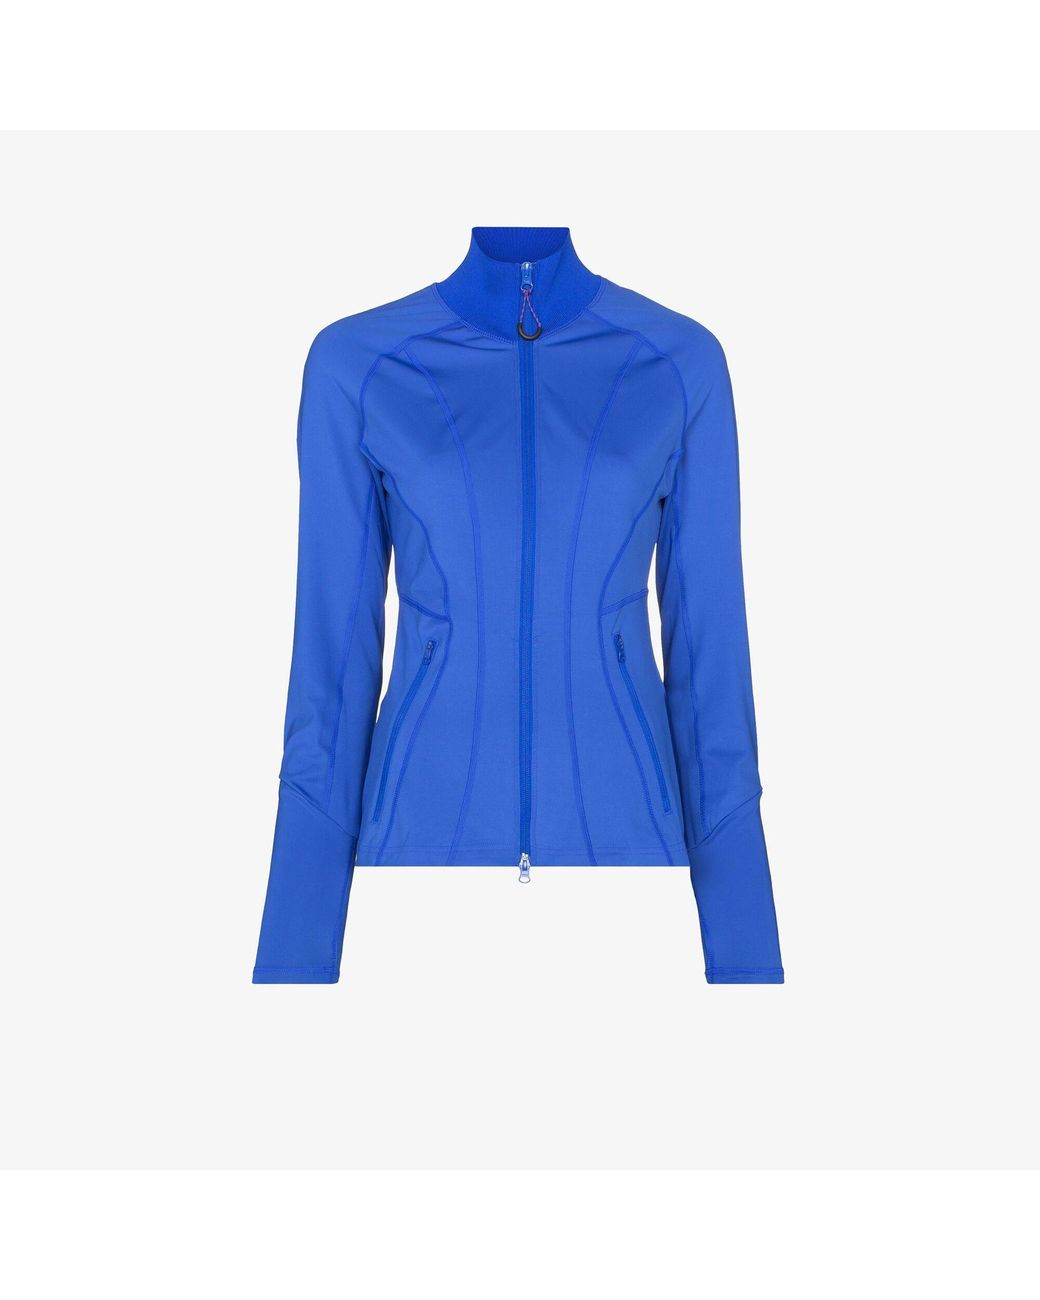 adidas By Stella McCartney Truepurpose Mid-layer Track Jacket in Blue ...